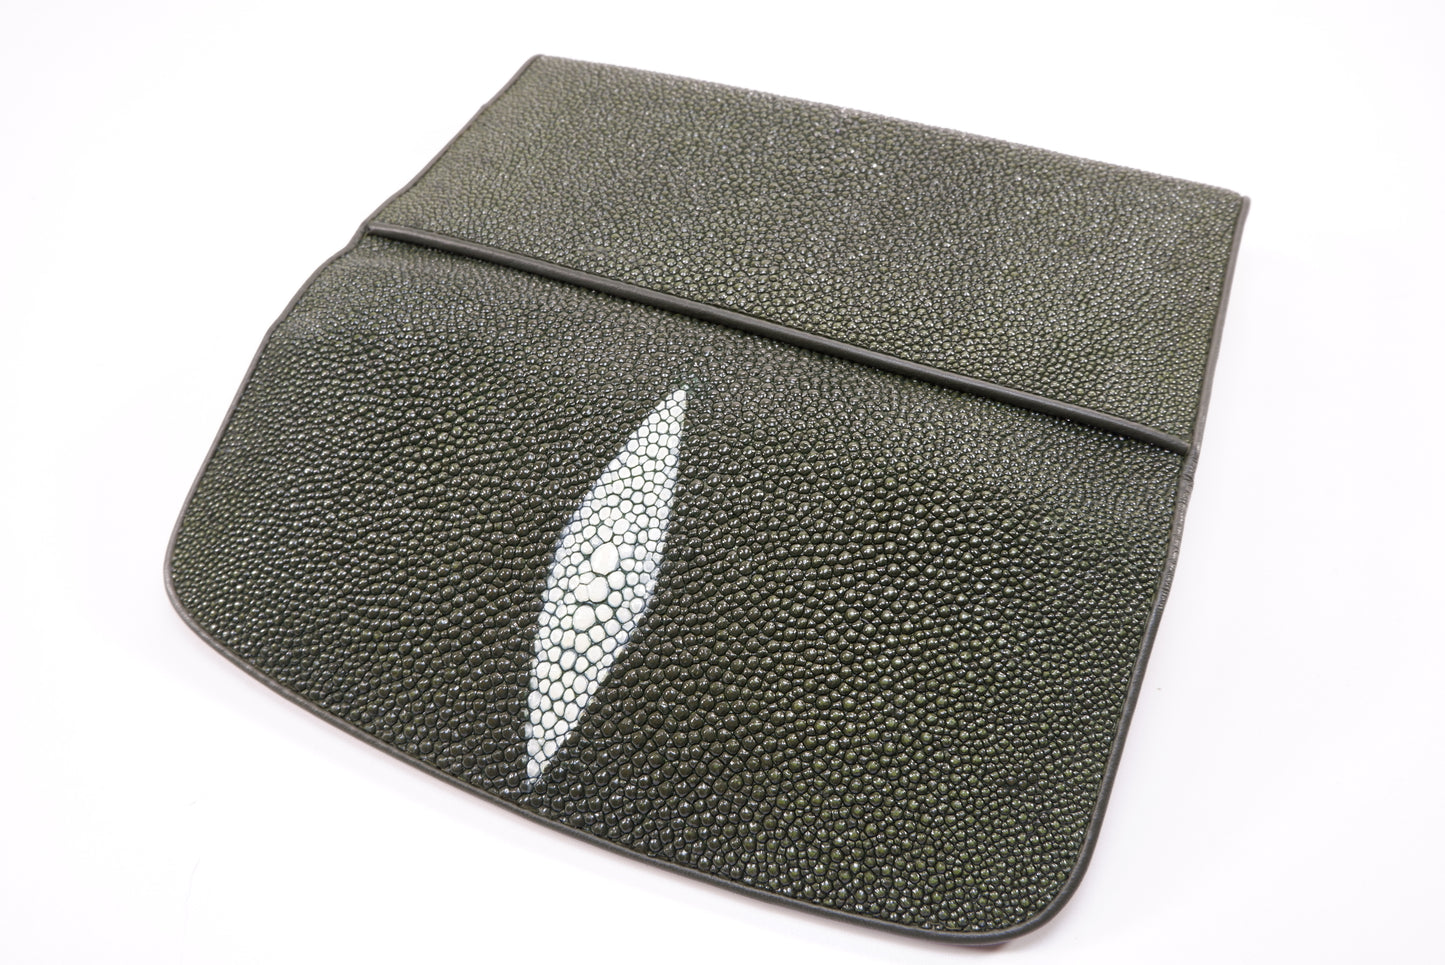 Stingray Handbag, Black Stingray Leather Purse, Genuine Stingray Leather  Totebag | eBay